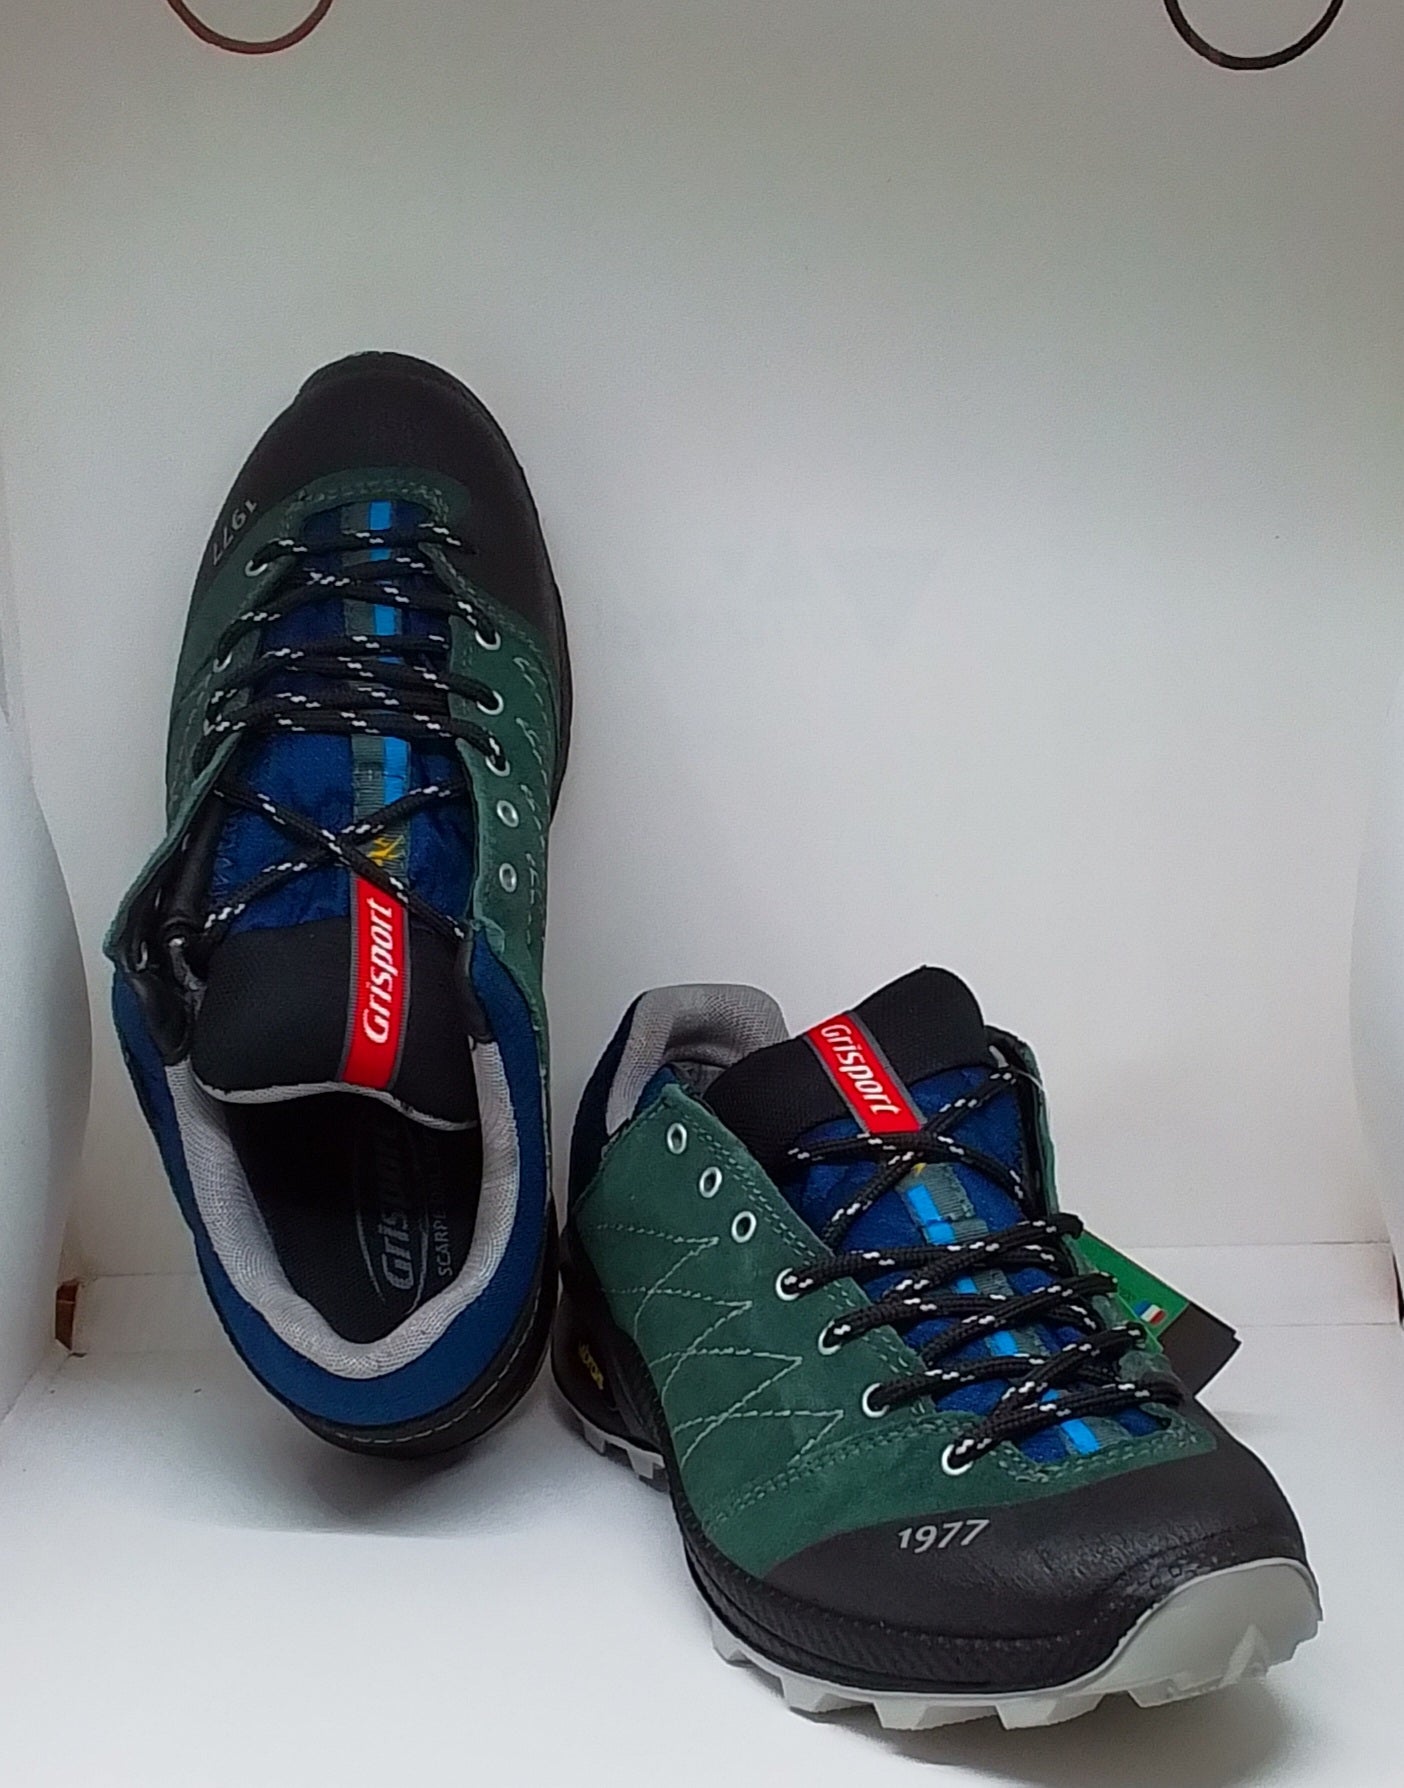 Grisport scarpa trekking uomo, art 13133,colore verde